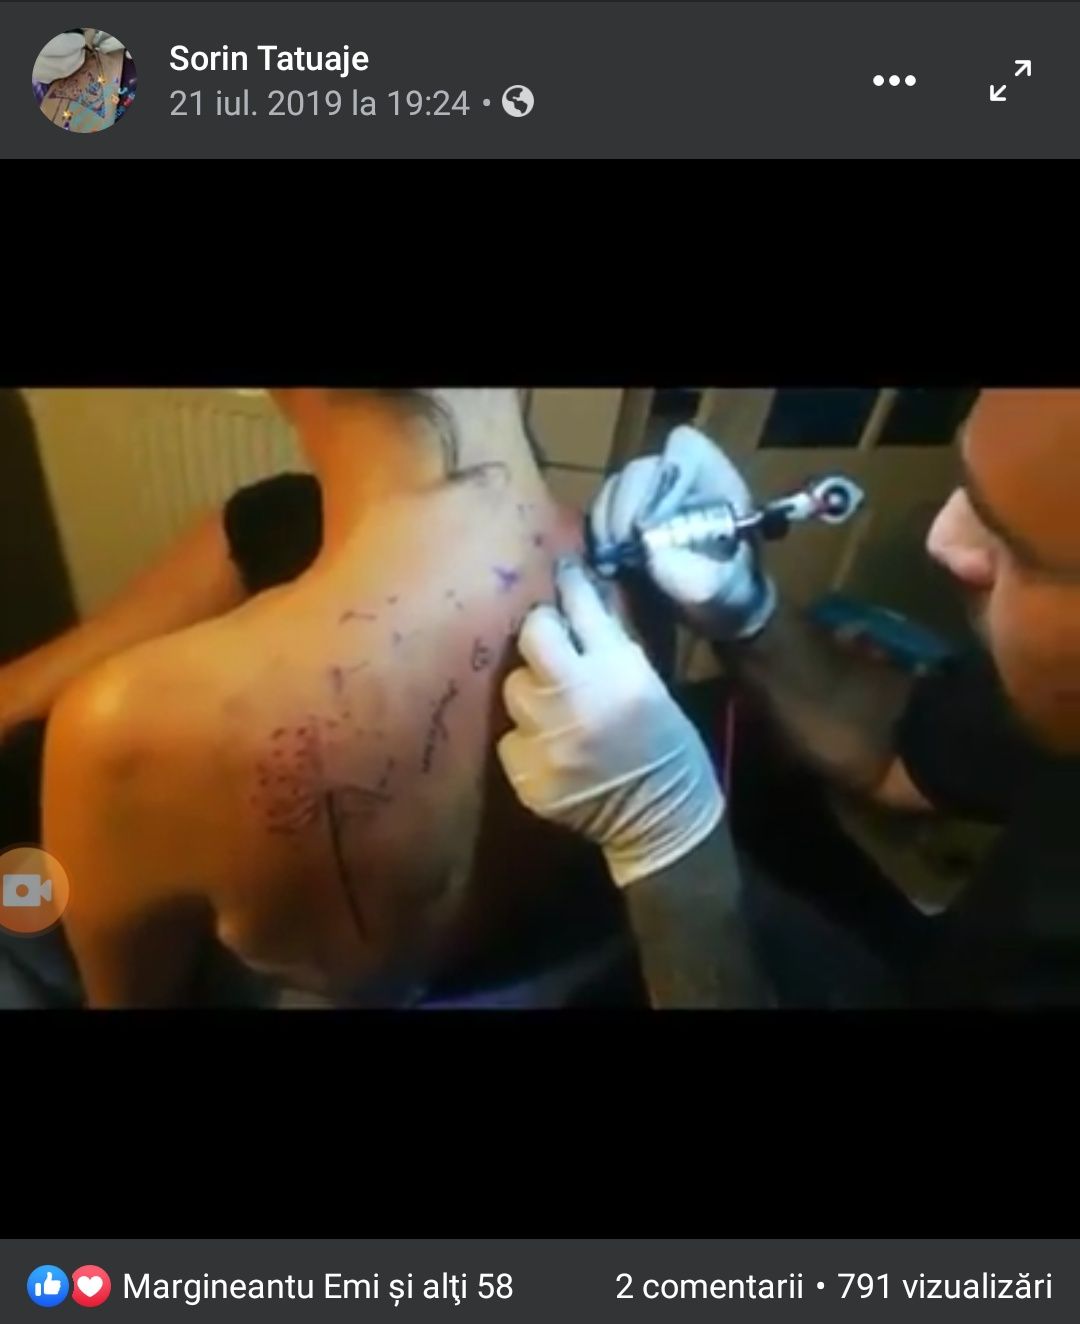 Realizez tatuaje tatuaj tattoo tatuaggi tatuajes Lugoj Timisoara